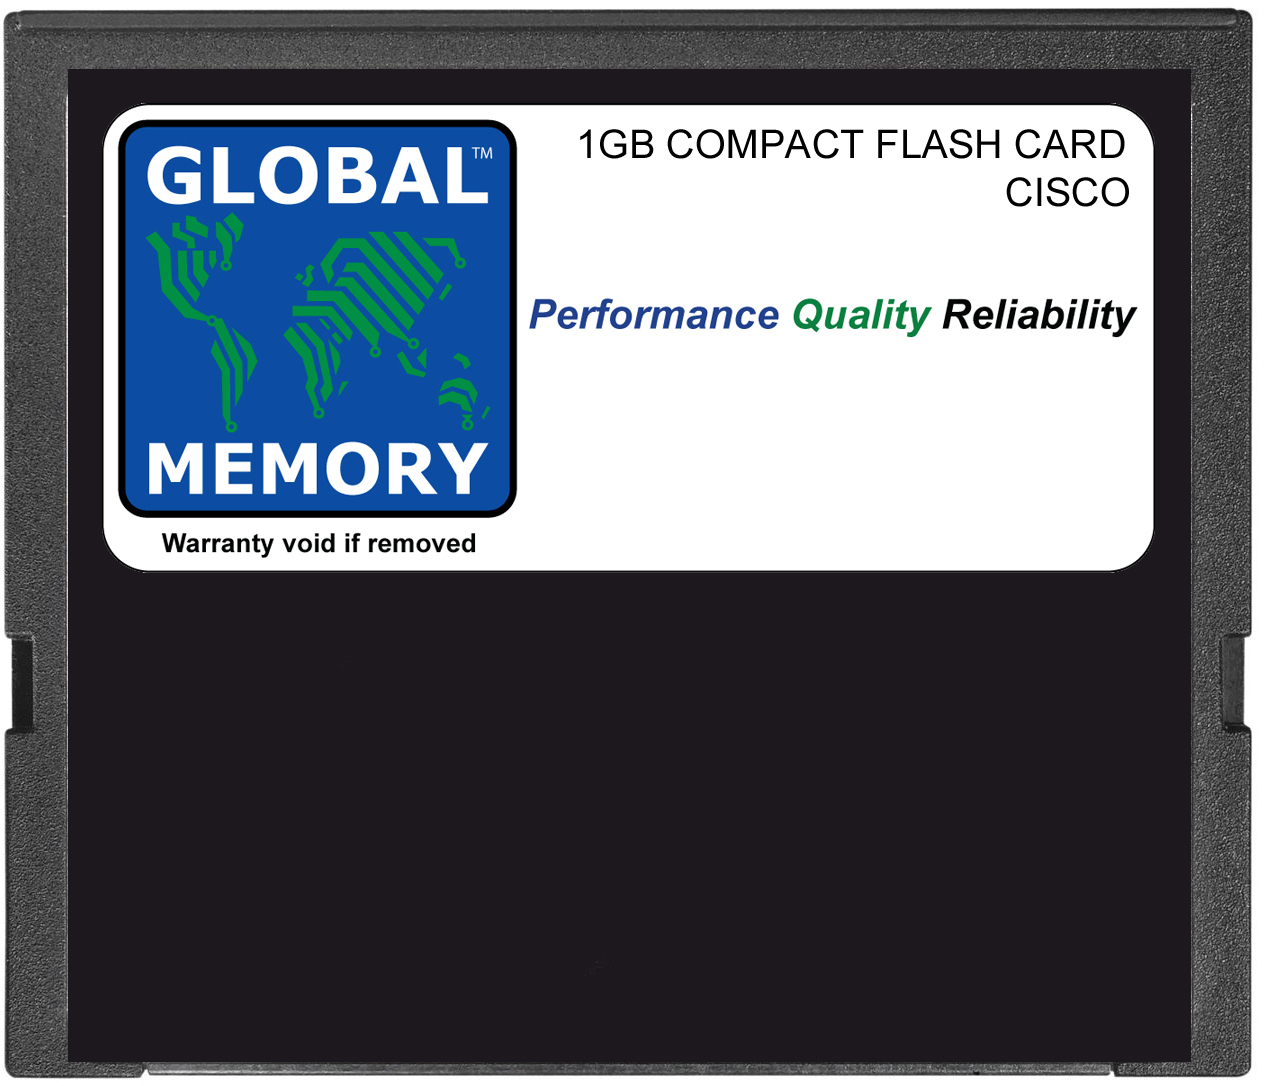 1GB COMPACT FLASH CARD MEMORY FOR CISCO RSP720-3C-GE / RSP720-3CXL-GE (MEM-RSP720-CF1G)